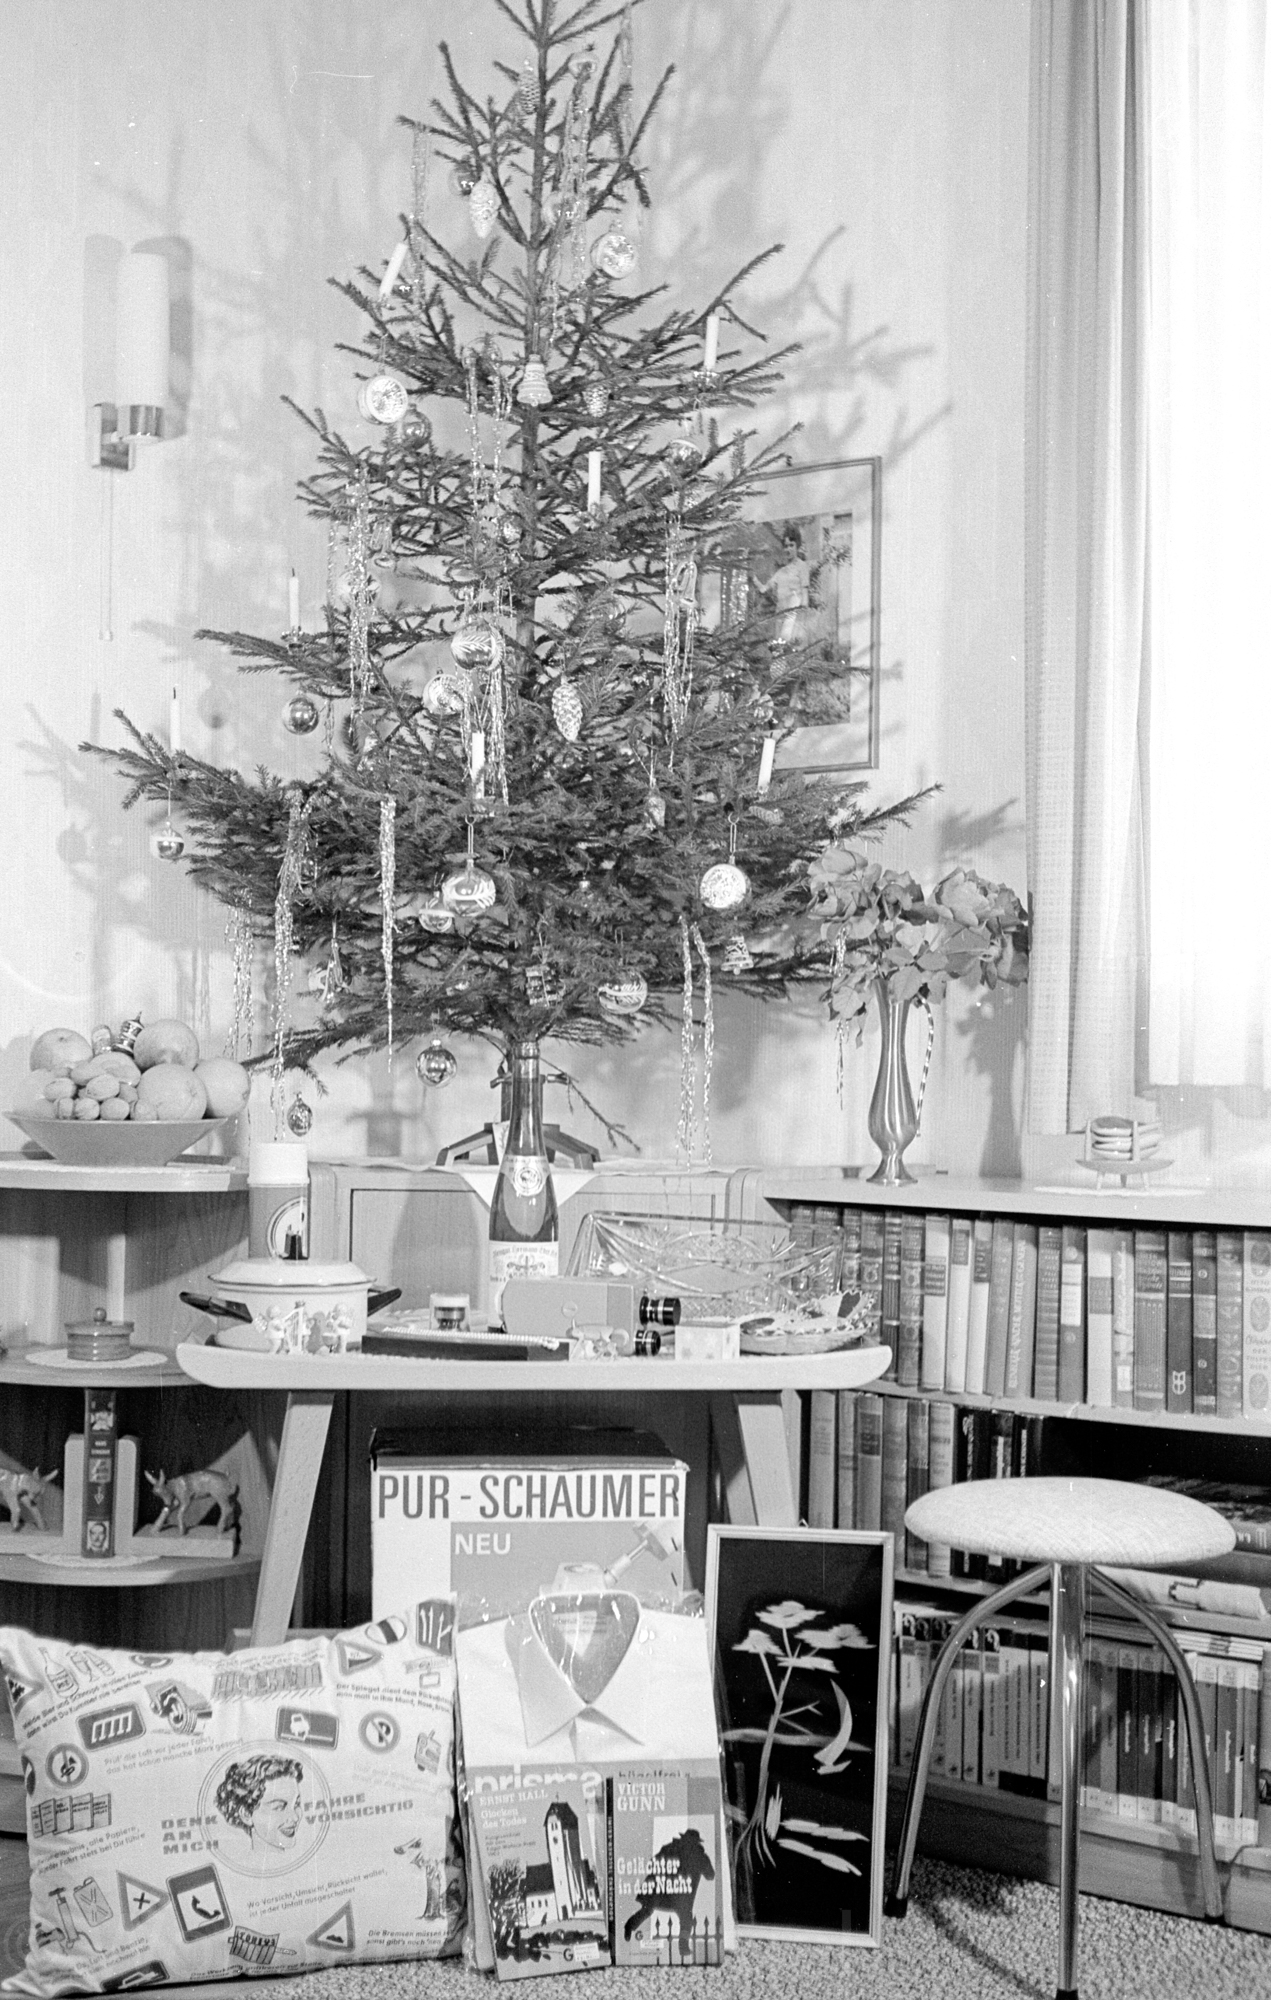 1965: Christmas tree and gifts